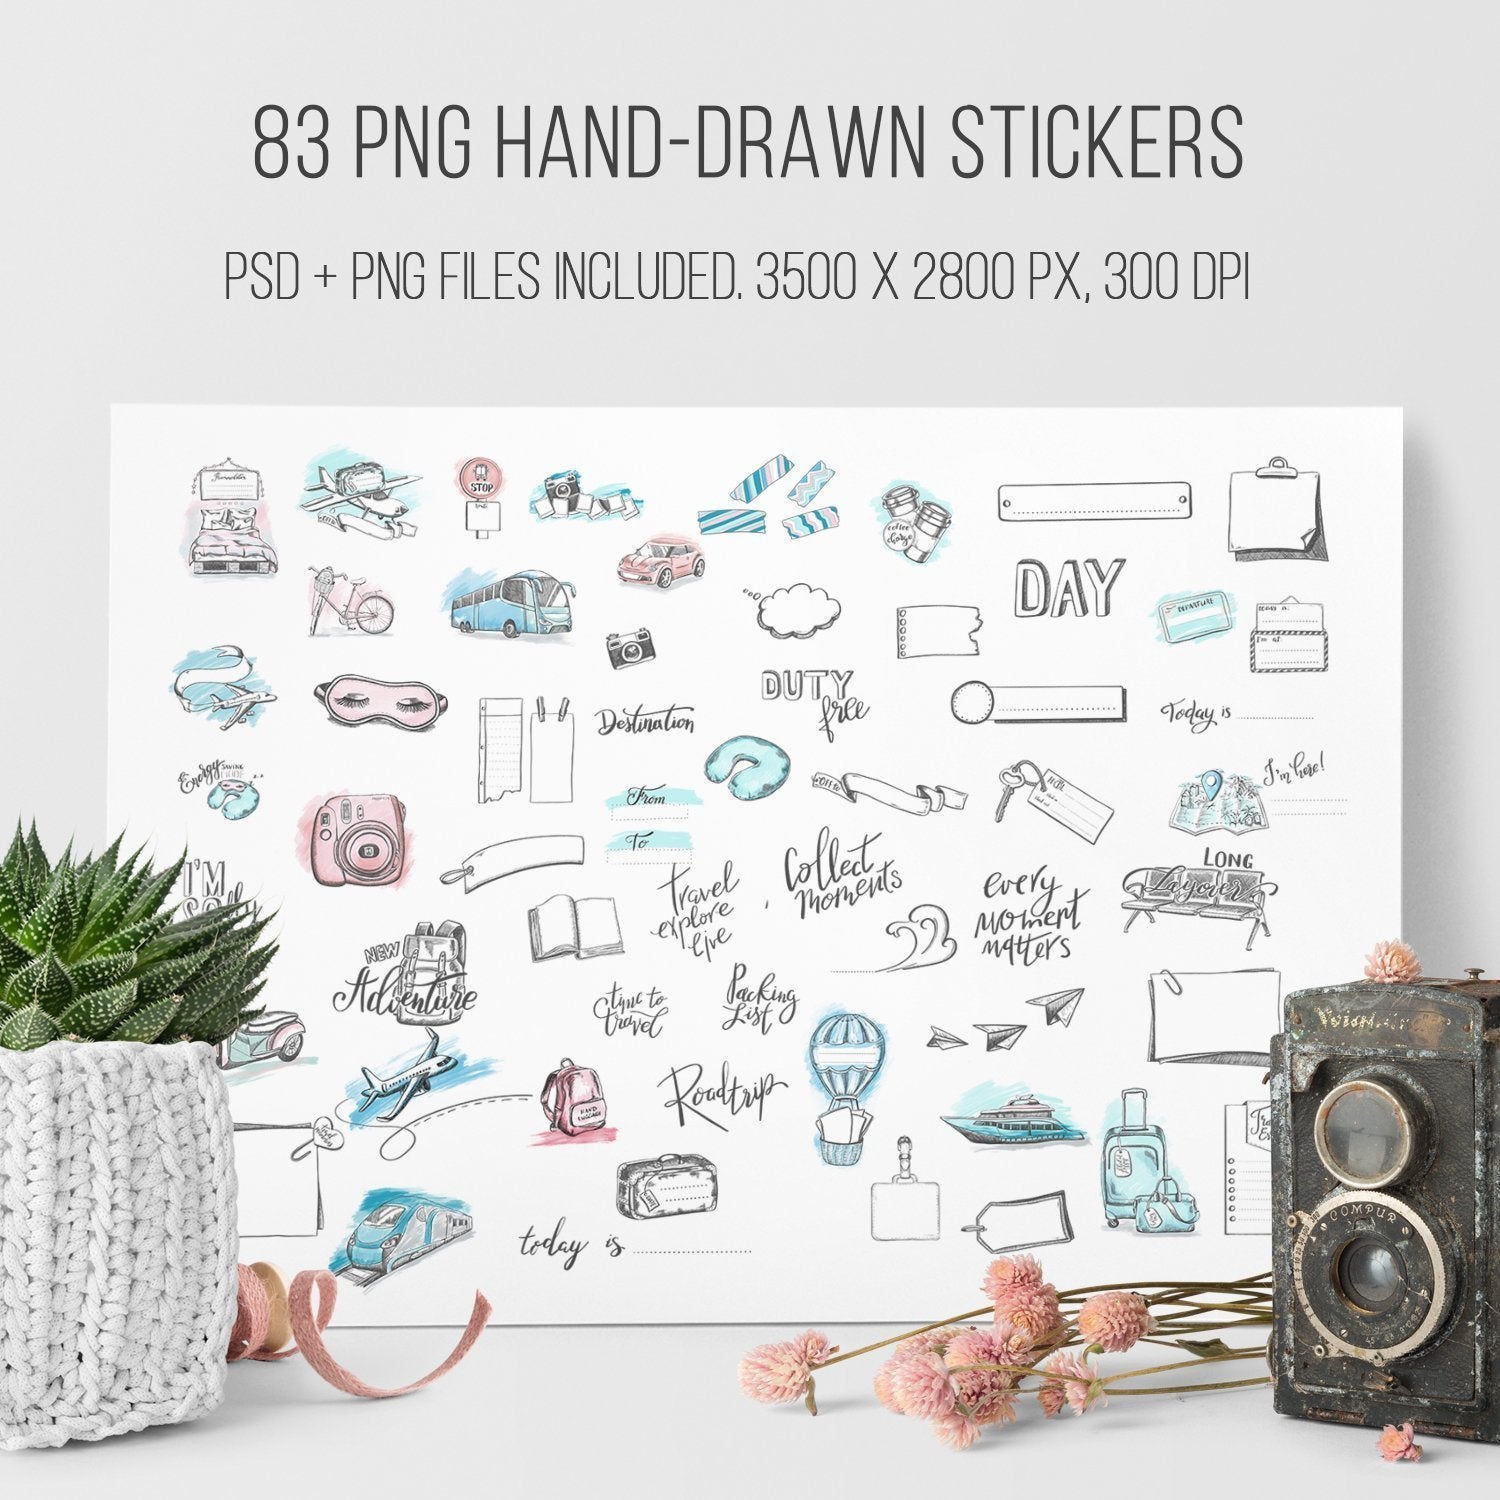 Travel journal Sticker pack - Hand drawn Digital stickers - 83 PNG